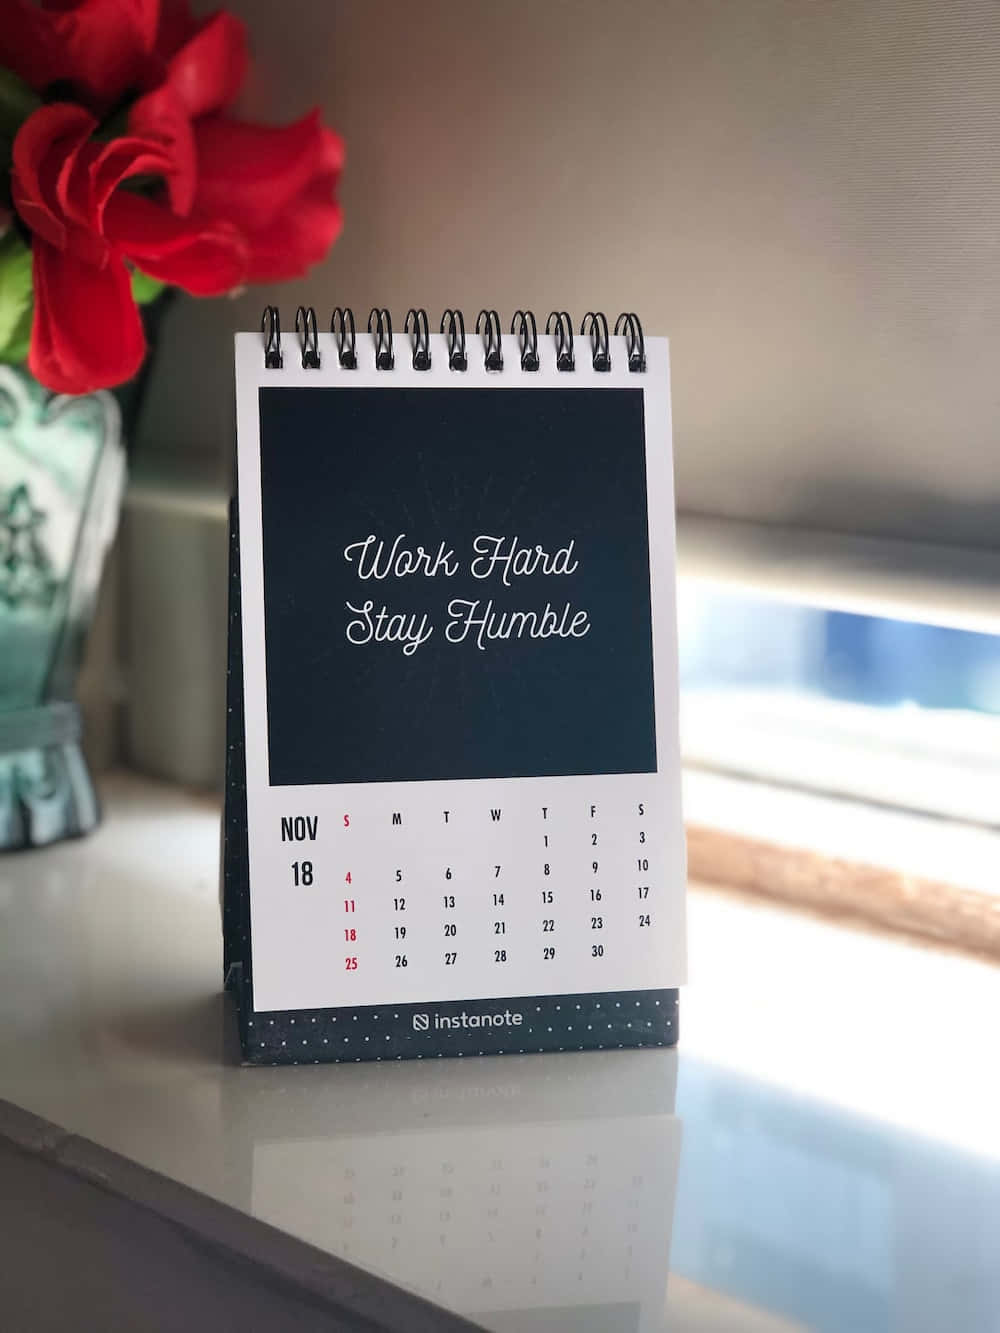 A Calendar With A Flower On It